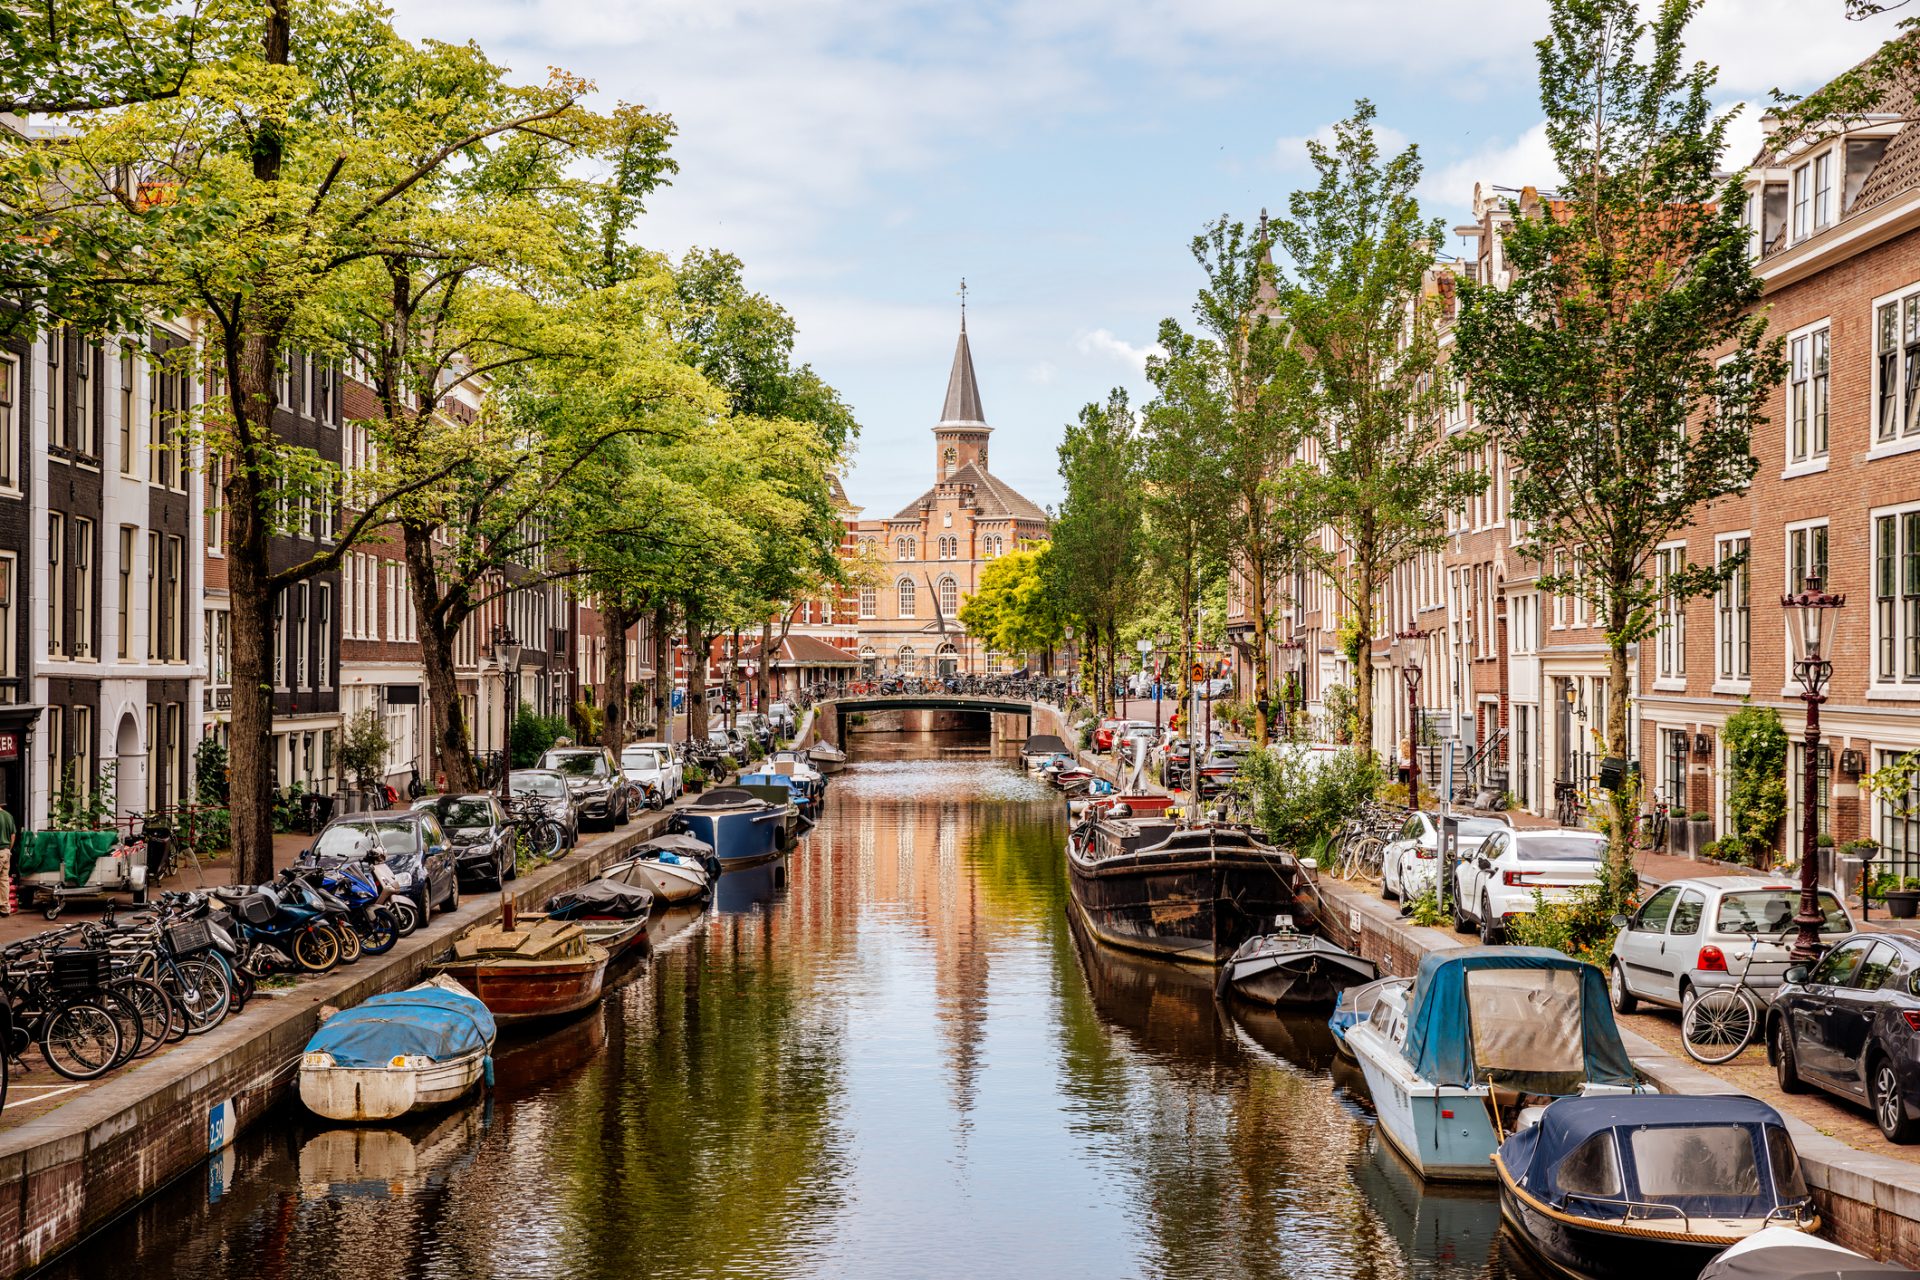 1. Amsterdam, the Netherlands